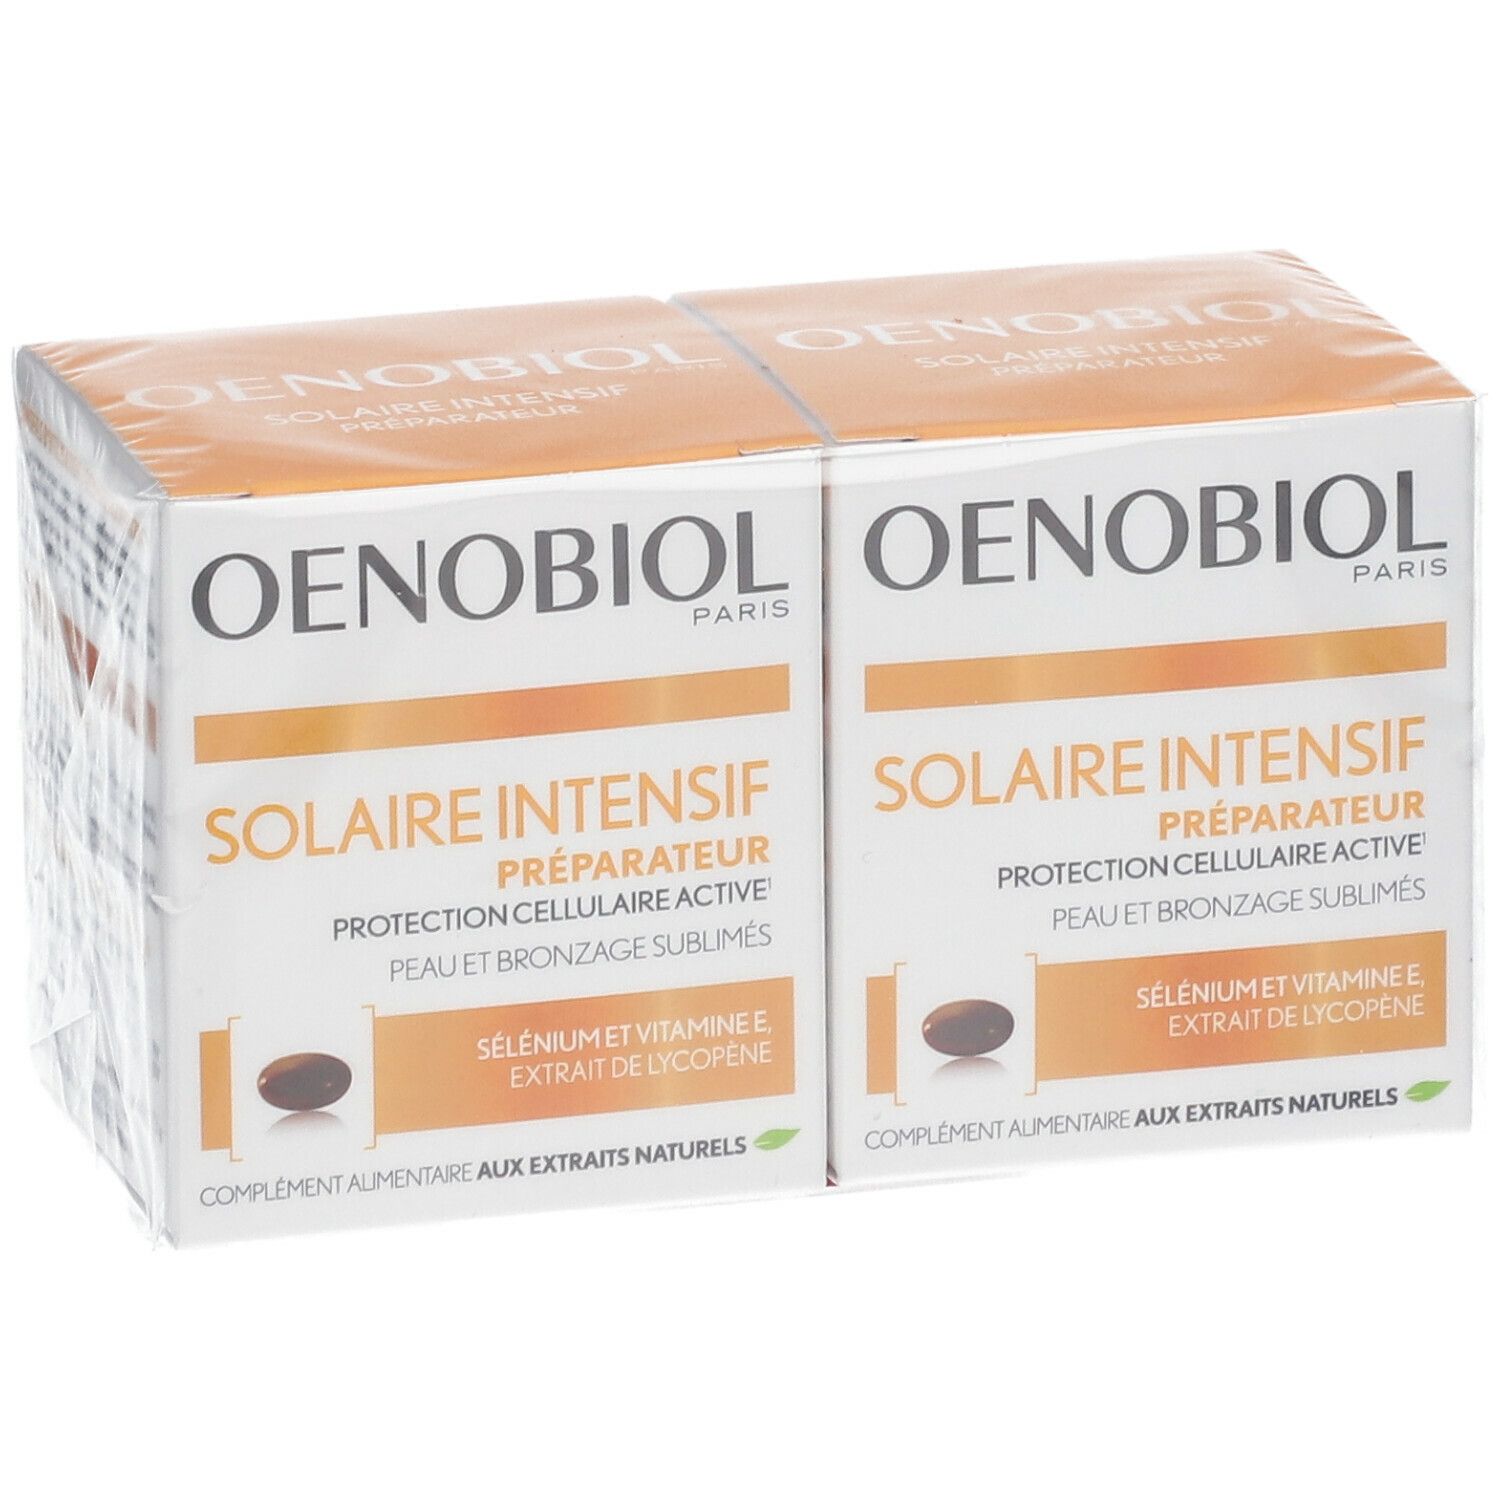 Oenobiol Solaire Intensif Preparateur Shop Farmaciait